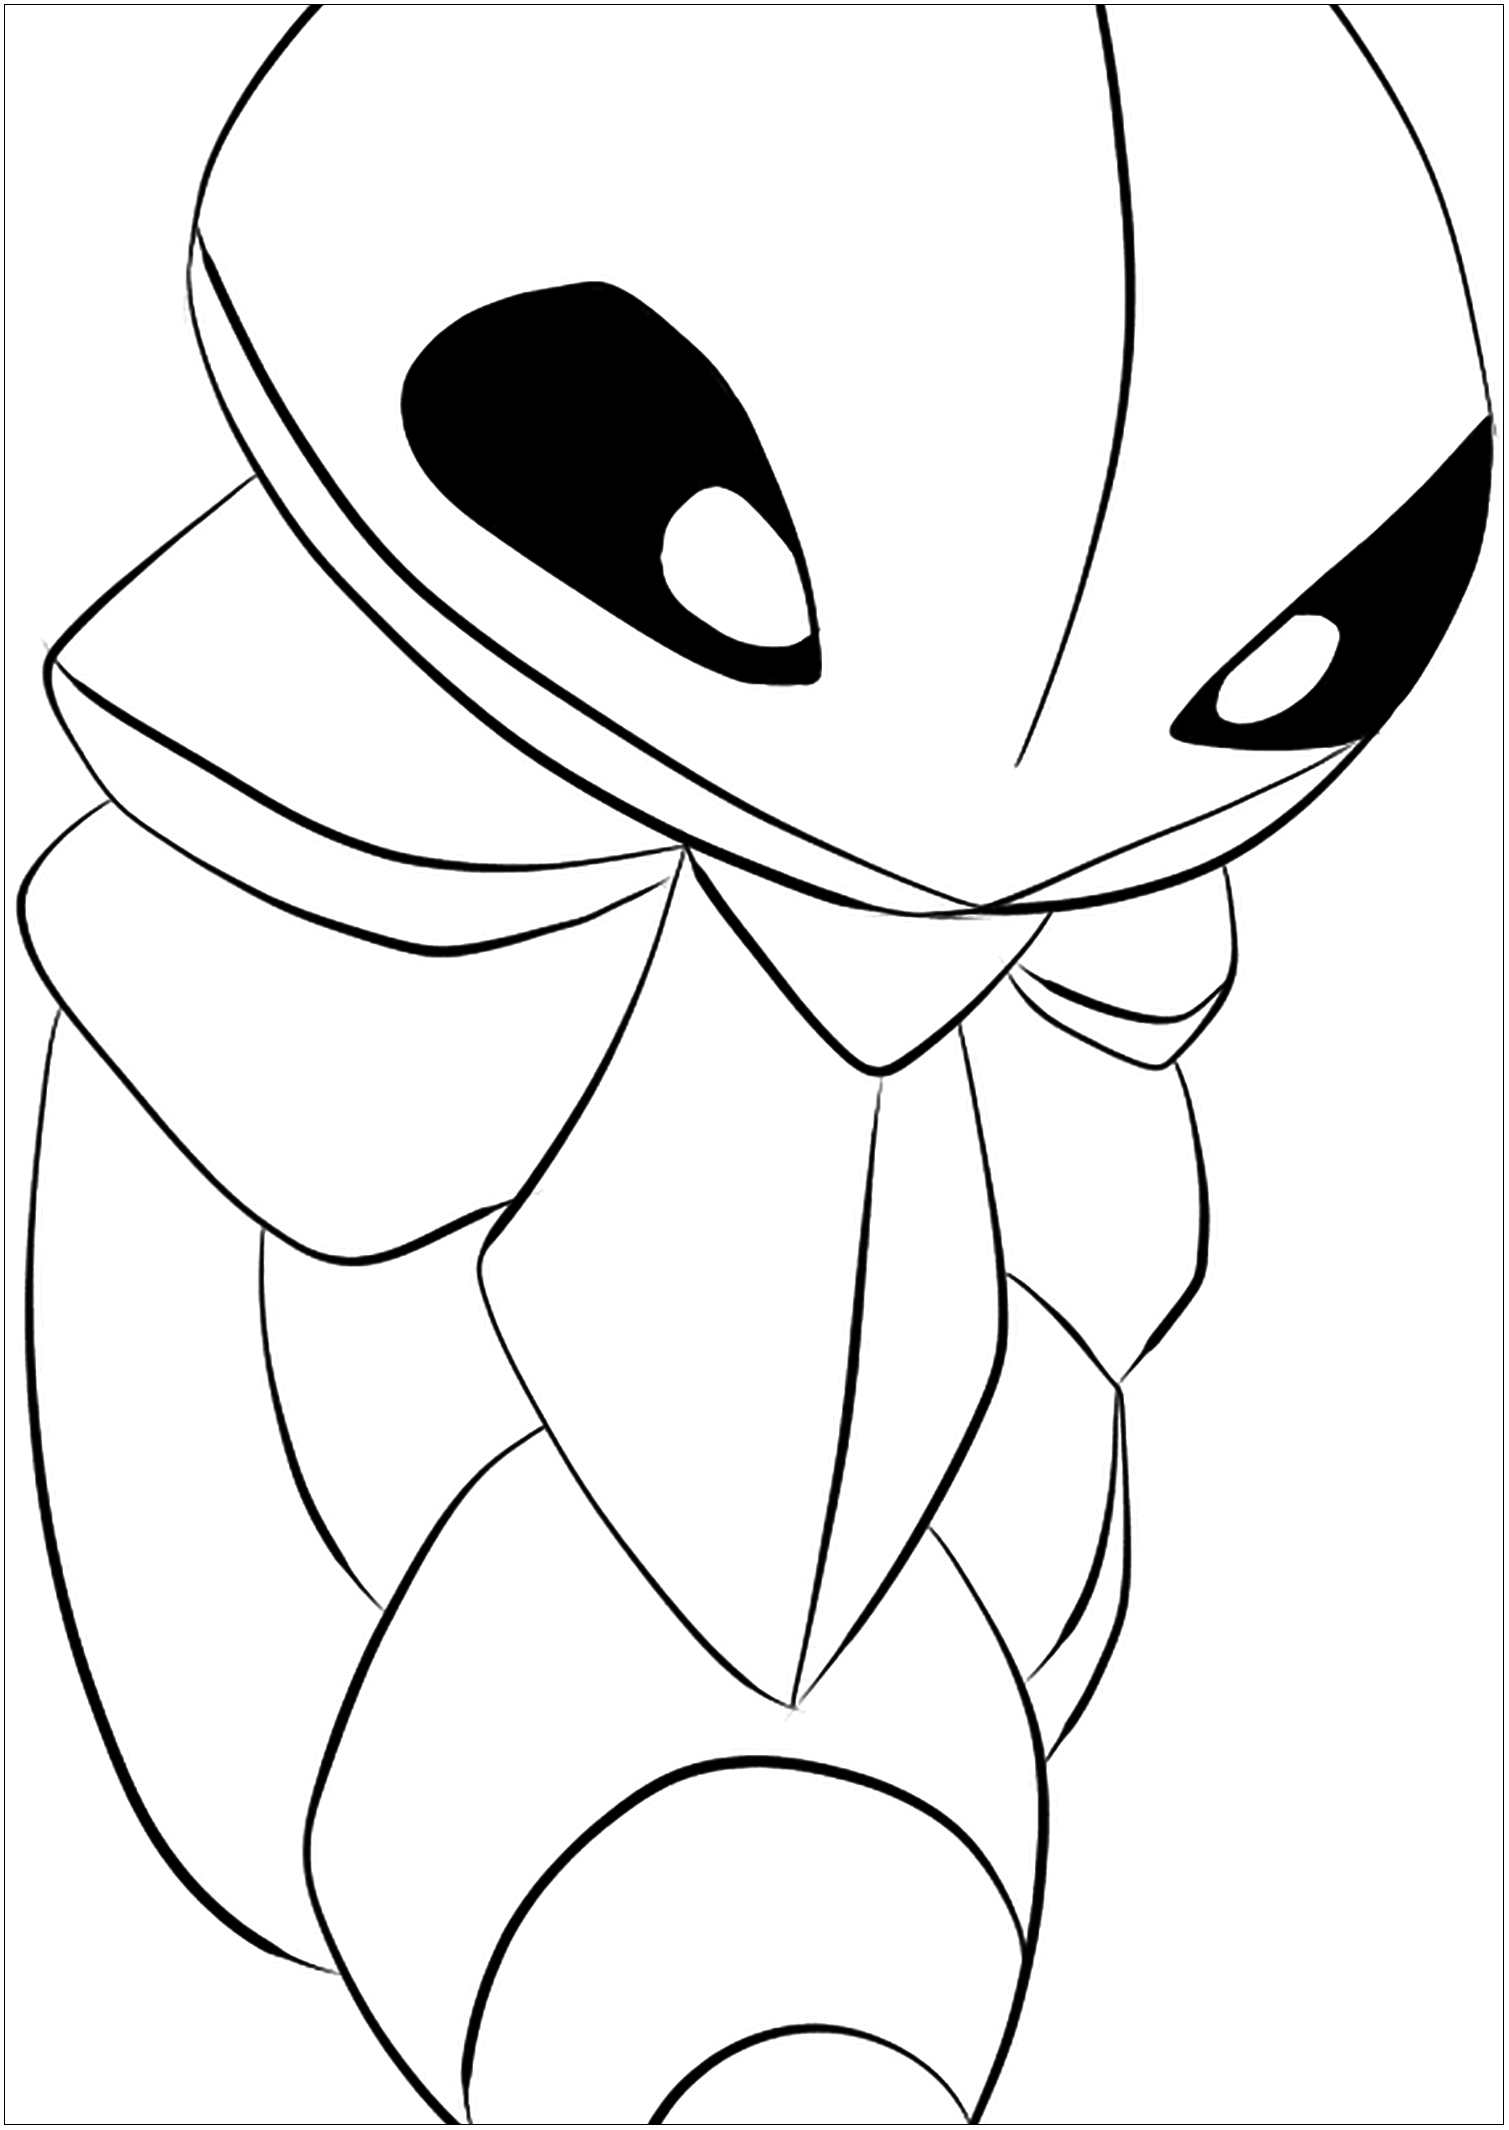 Desenhos para colorir Pokemon - Mewtwo - Desenhos Pokemon